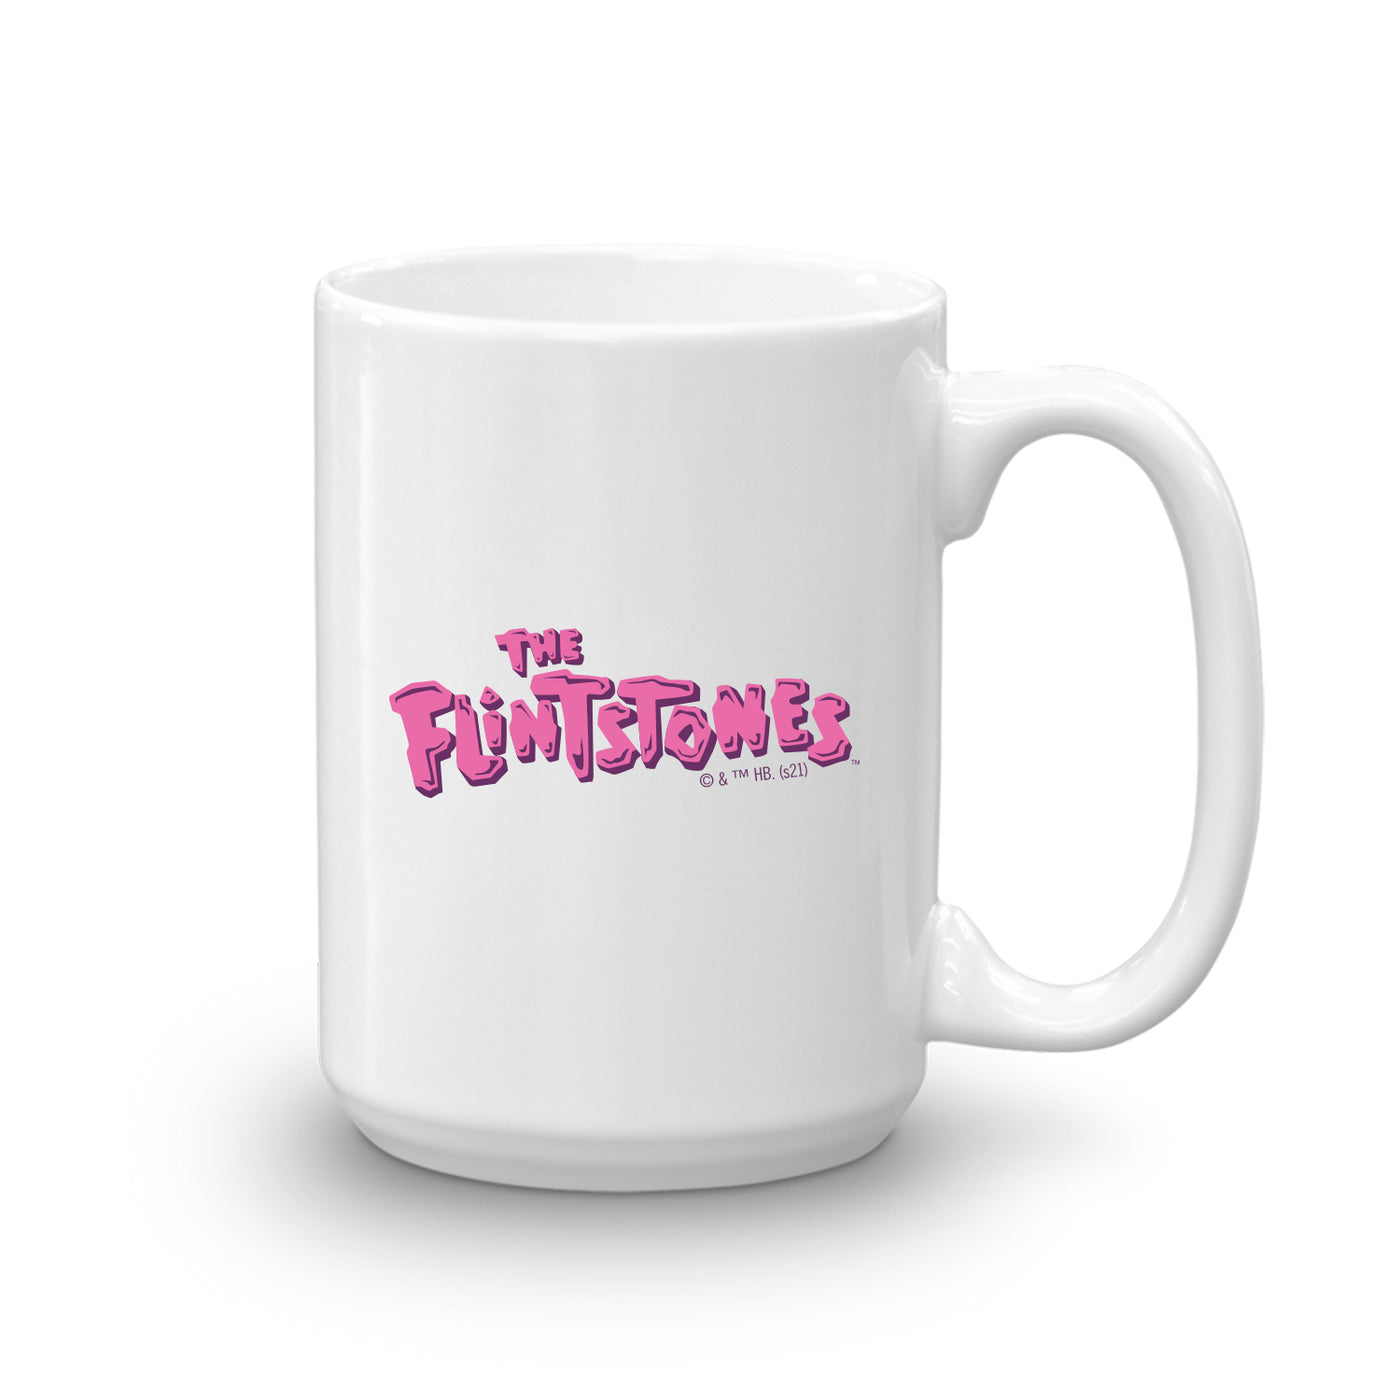 The Flintstones Ladies' Night White Mug